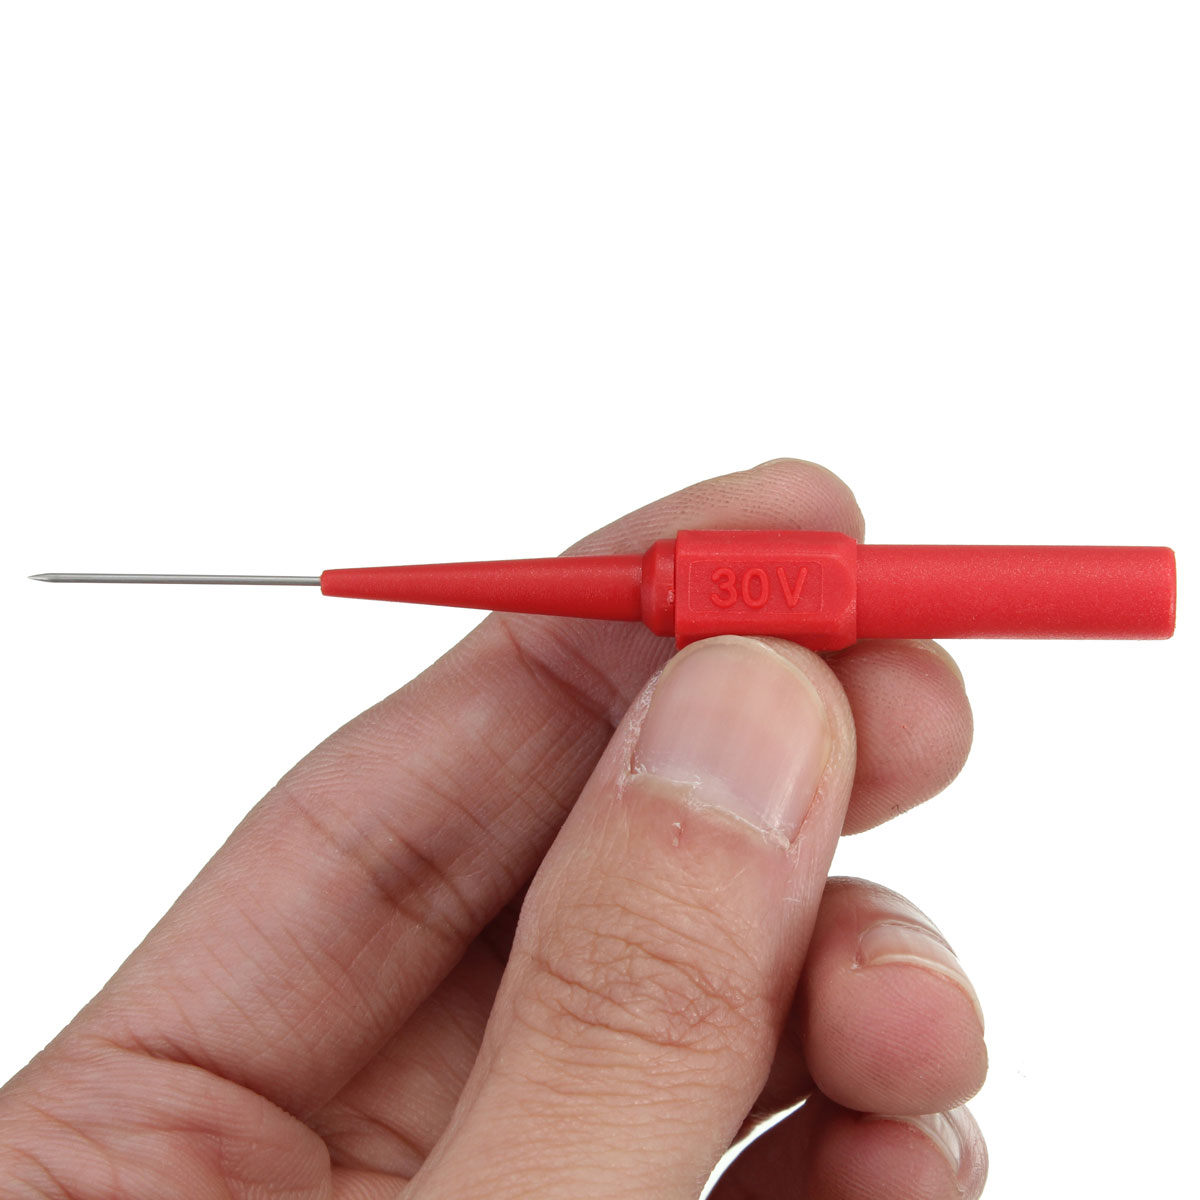 2x Insulation Piercing Needle Non-destructive Multimeter Test Probes Red/Black 